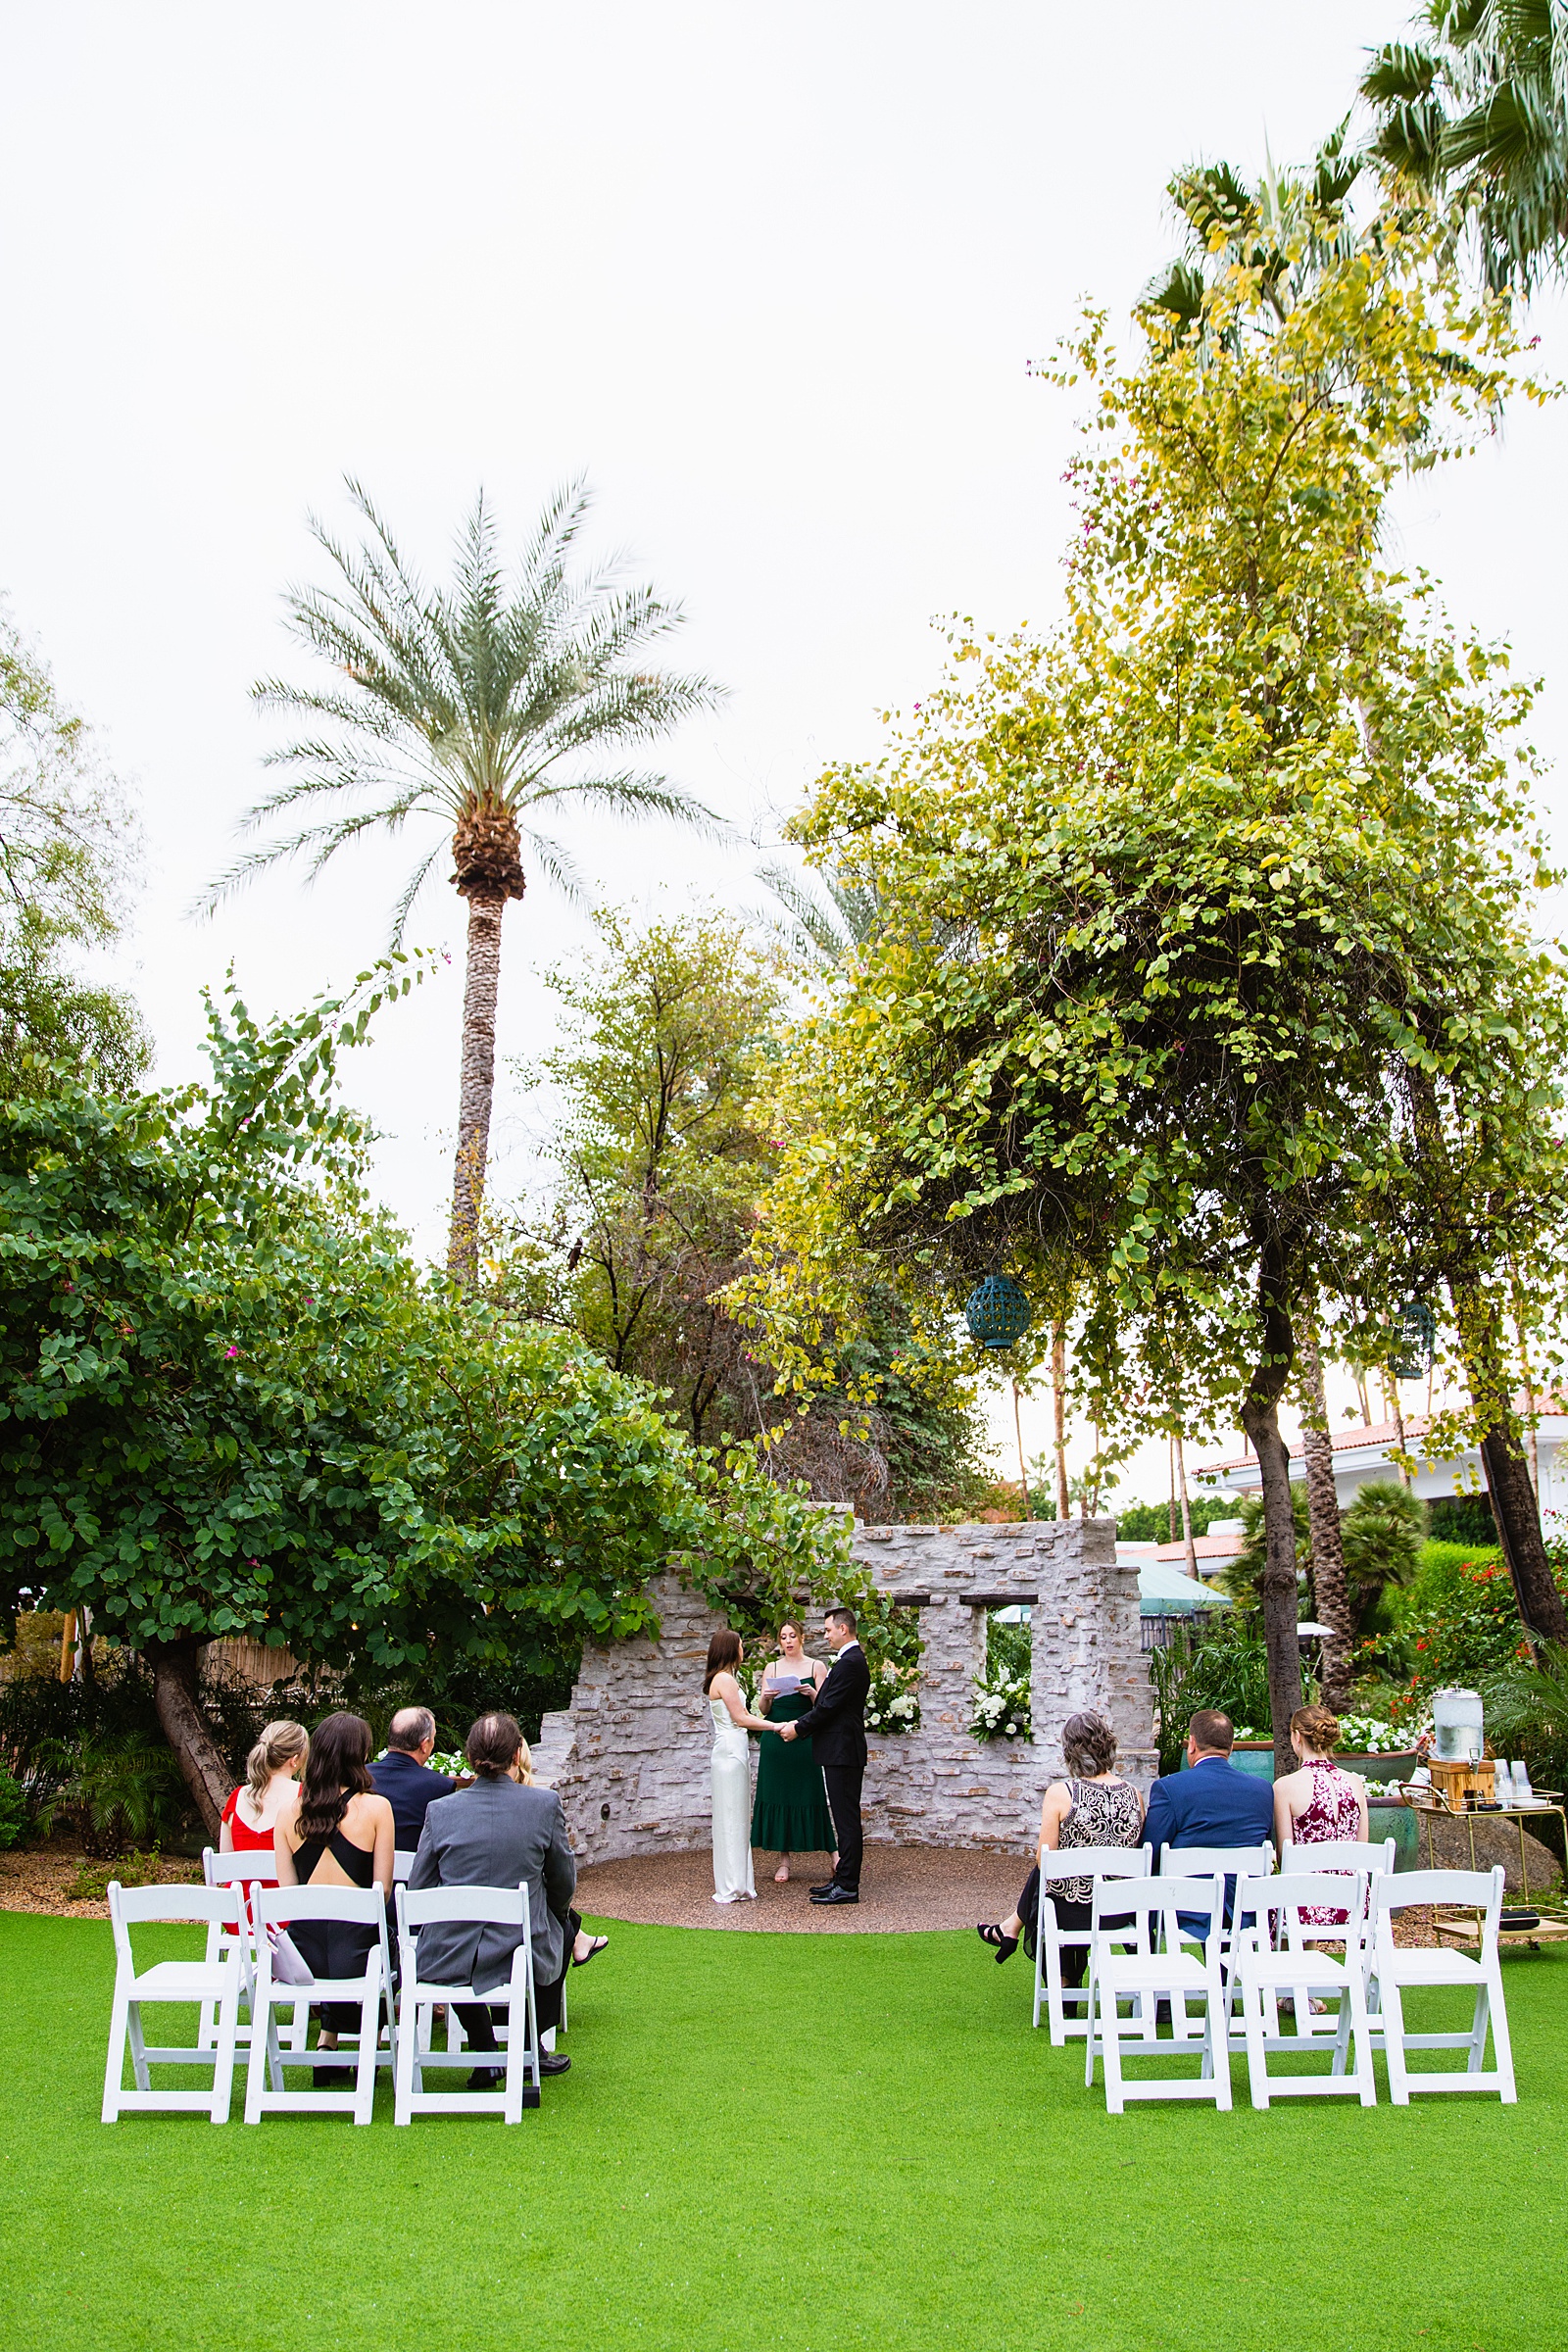 Wedding ceremony at The Scott by Arizona wedding photographer PMA Photography.